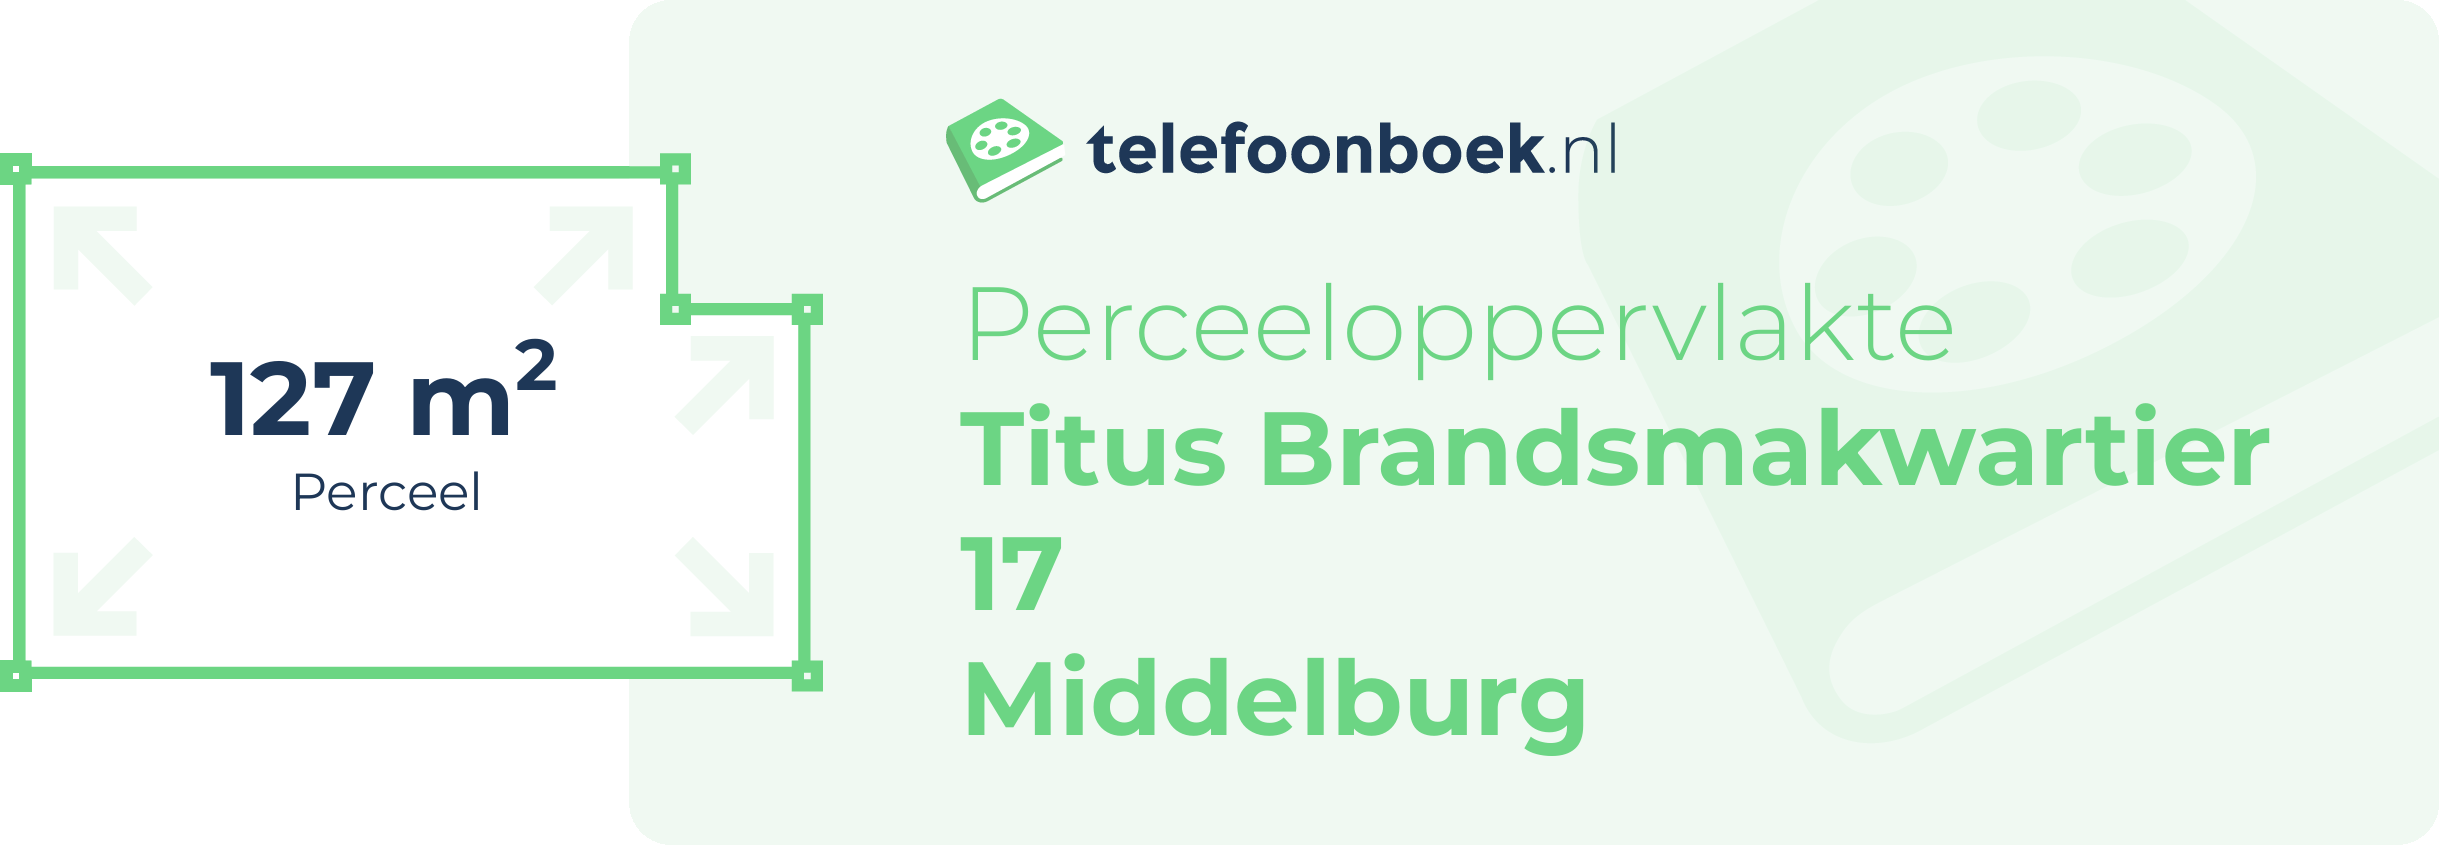 Perceeloppervlakte Titus Brandsmakwartier 17 Middelburg